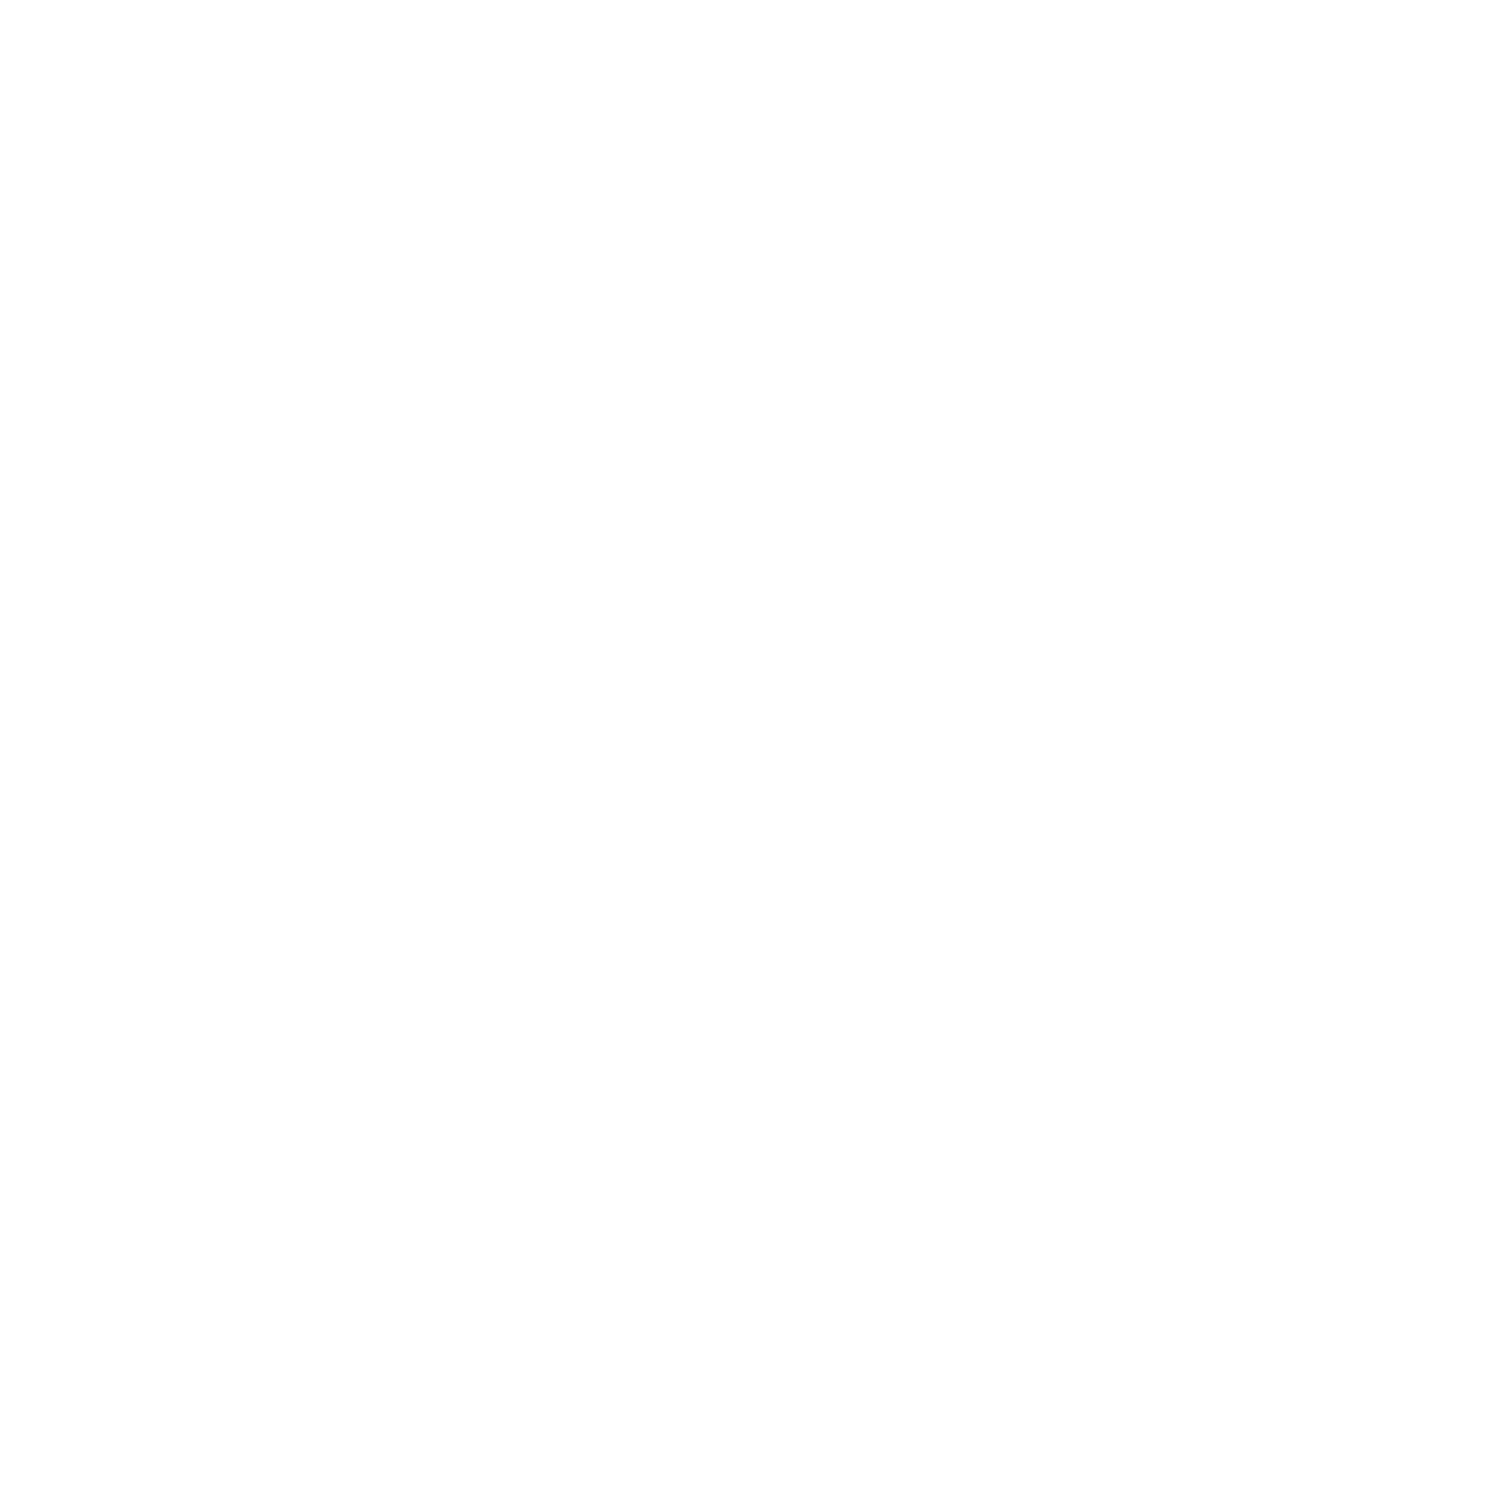 Coburg Brewing Co